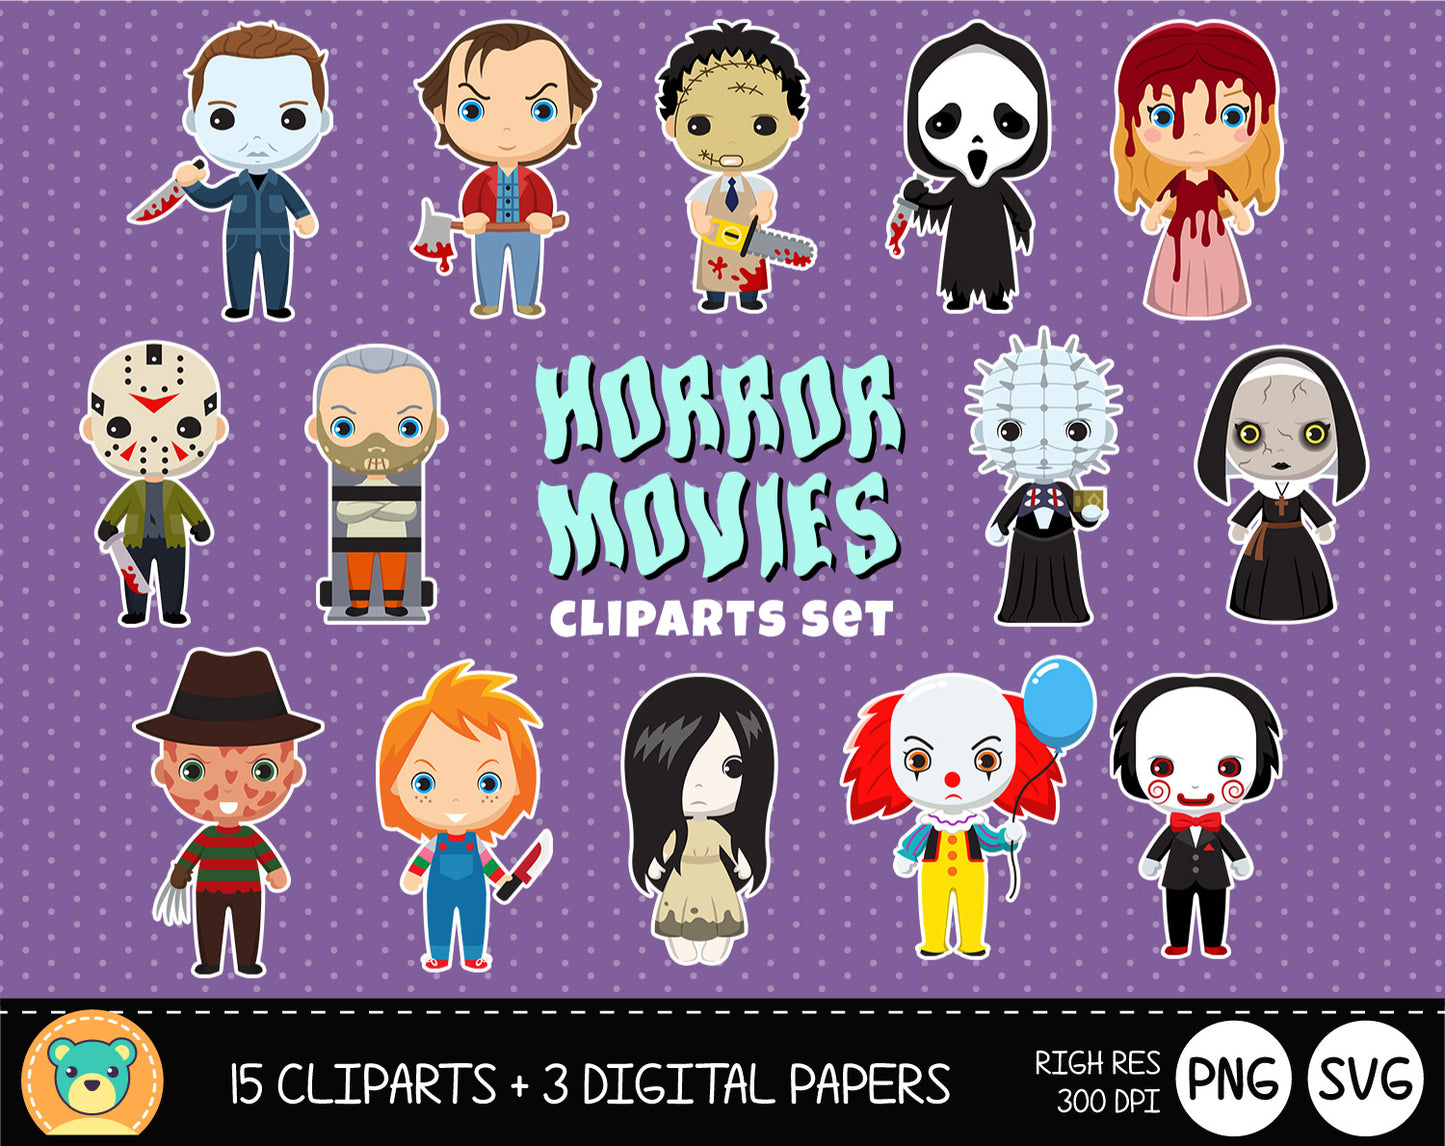 Horror Movies clipart set, Digital clip art for decoration, scrapbooking, Halloween cliparts , instant download